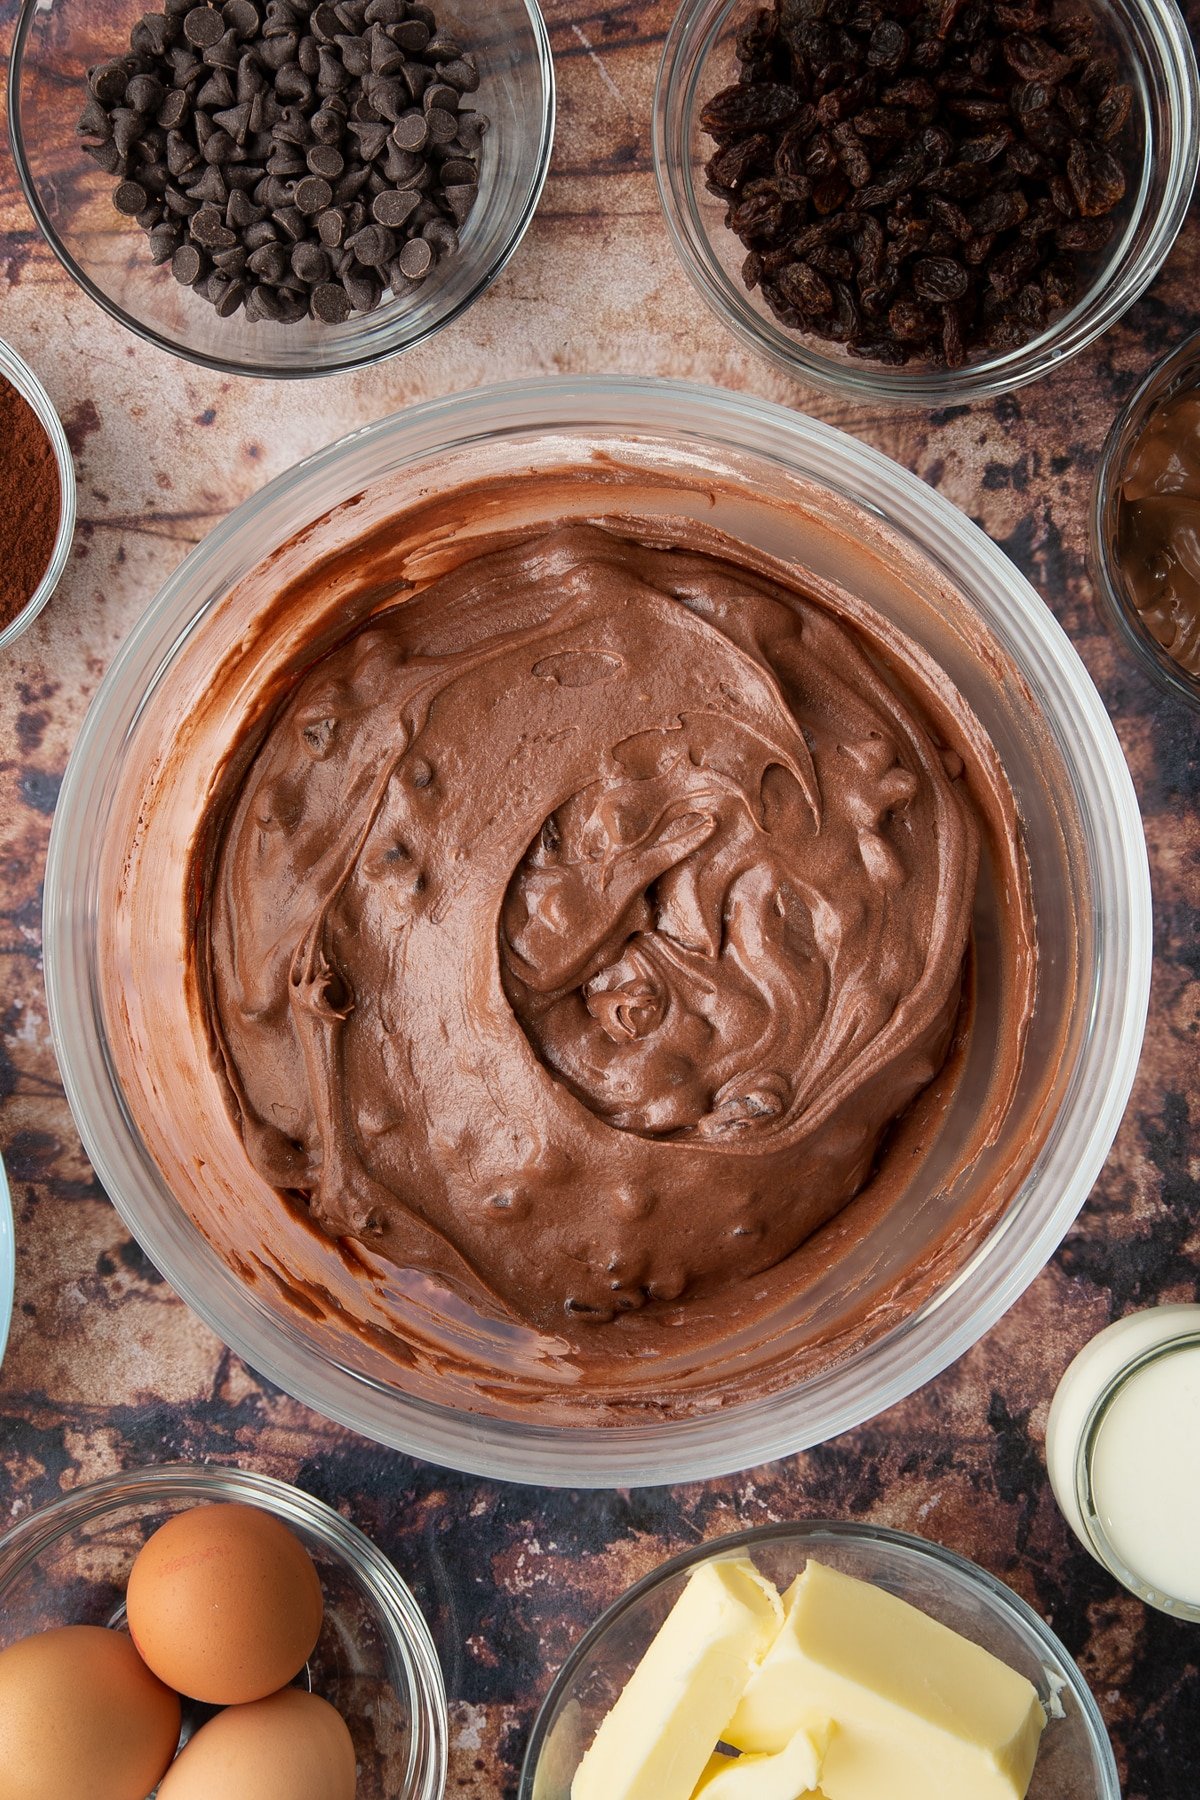 Chocolate raisin muffin batter in a bowl. Ingredients to make chocolate raisin muffins surround the bowl.